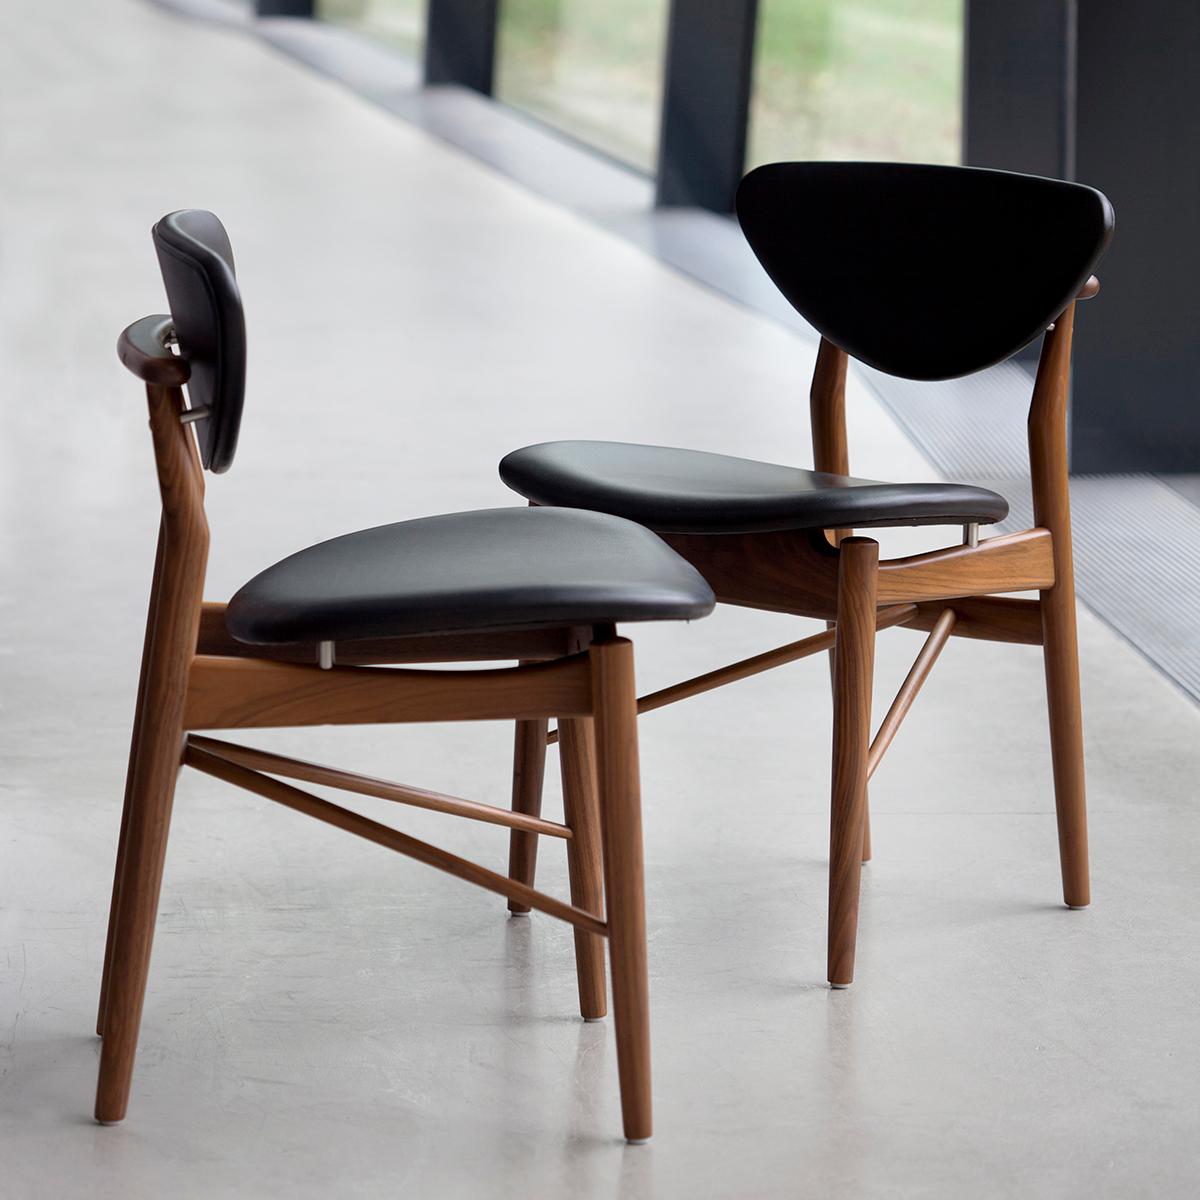 Contemporary Finn Juhl 108 Chair, Wood and Fabric by House of Finn Juhl